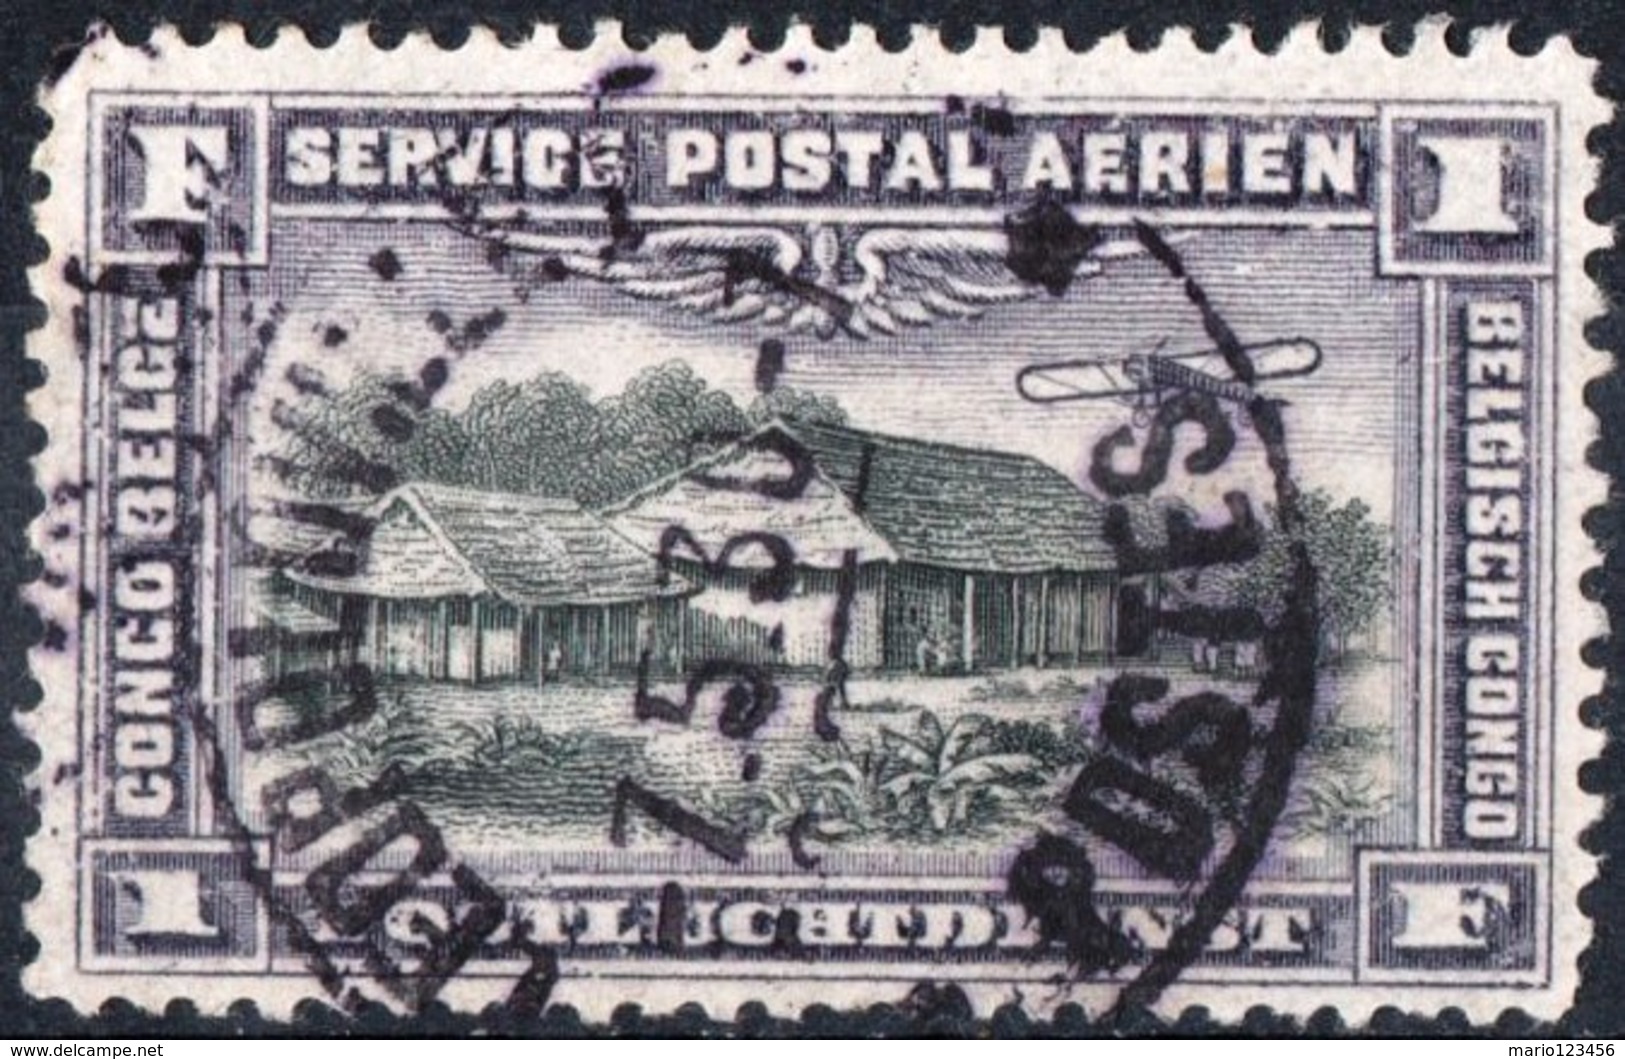 CONGO BELGA, BELGIAN CONGO, COLONIA BELGA, POSTA AEREA, AIRMAIL, 1934,  USATO Michel 43   Scott C2 - Used Stamps